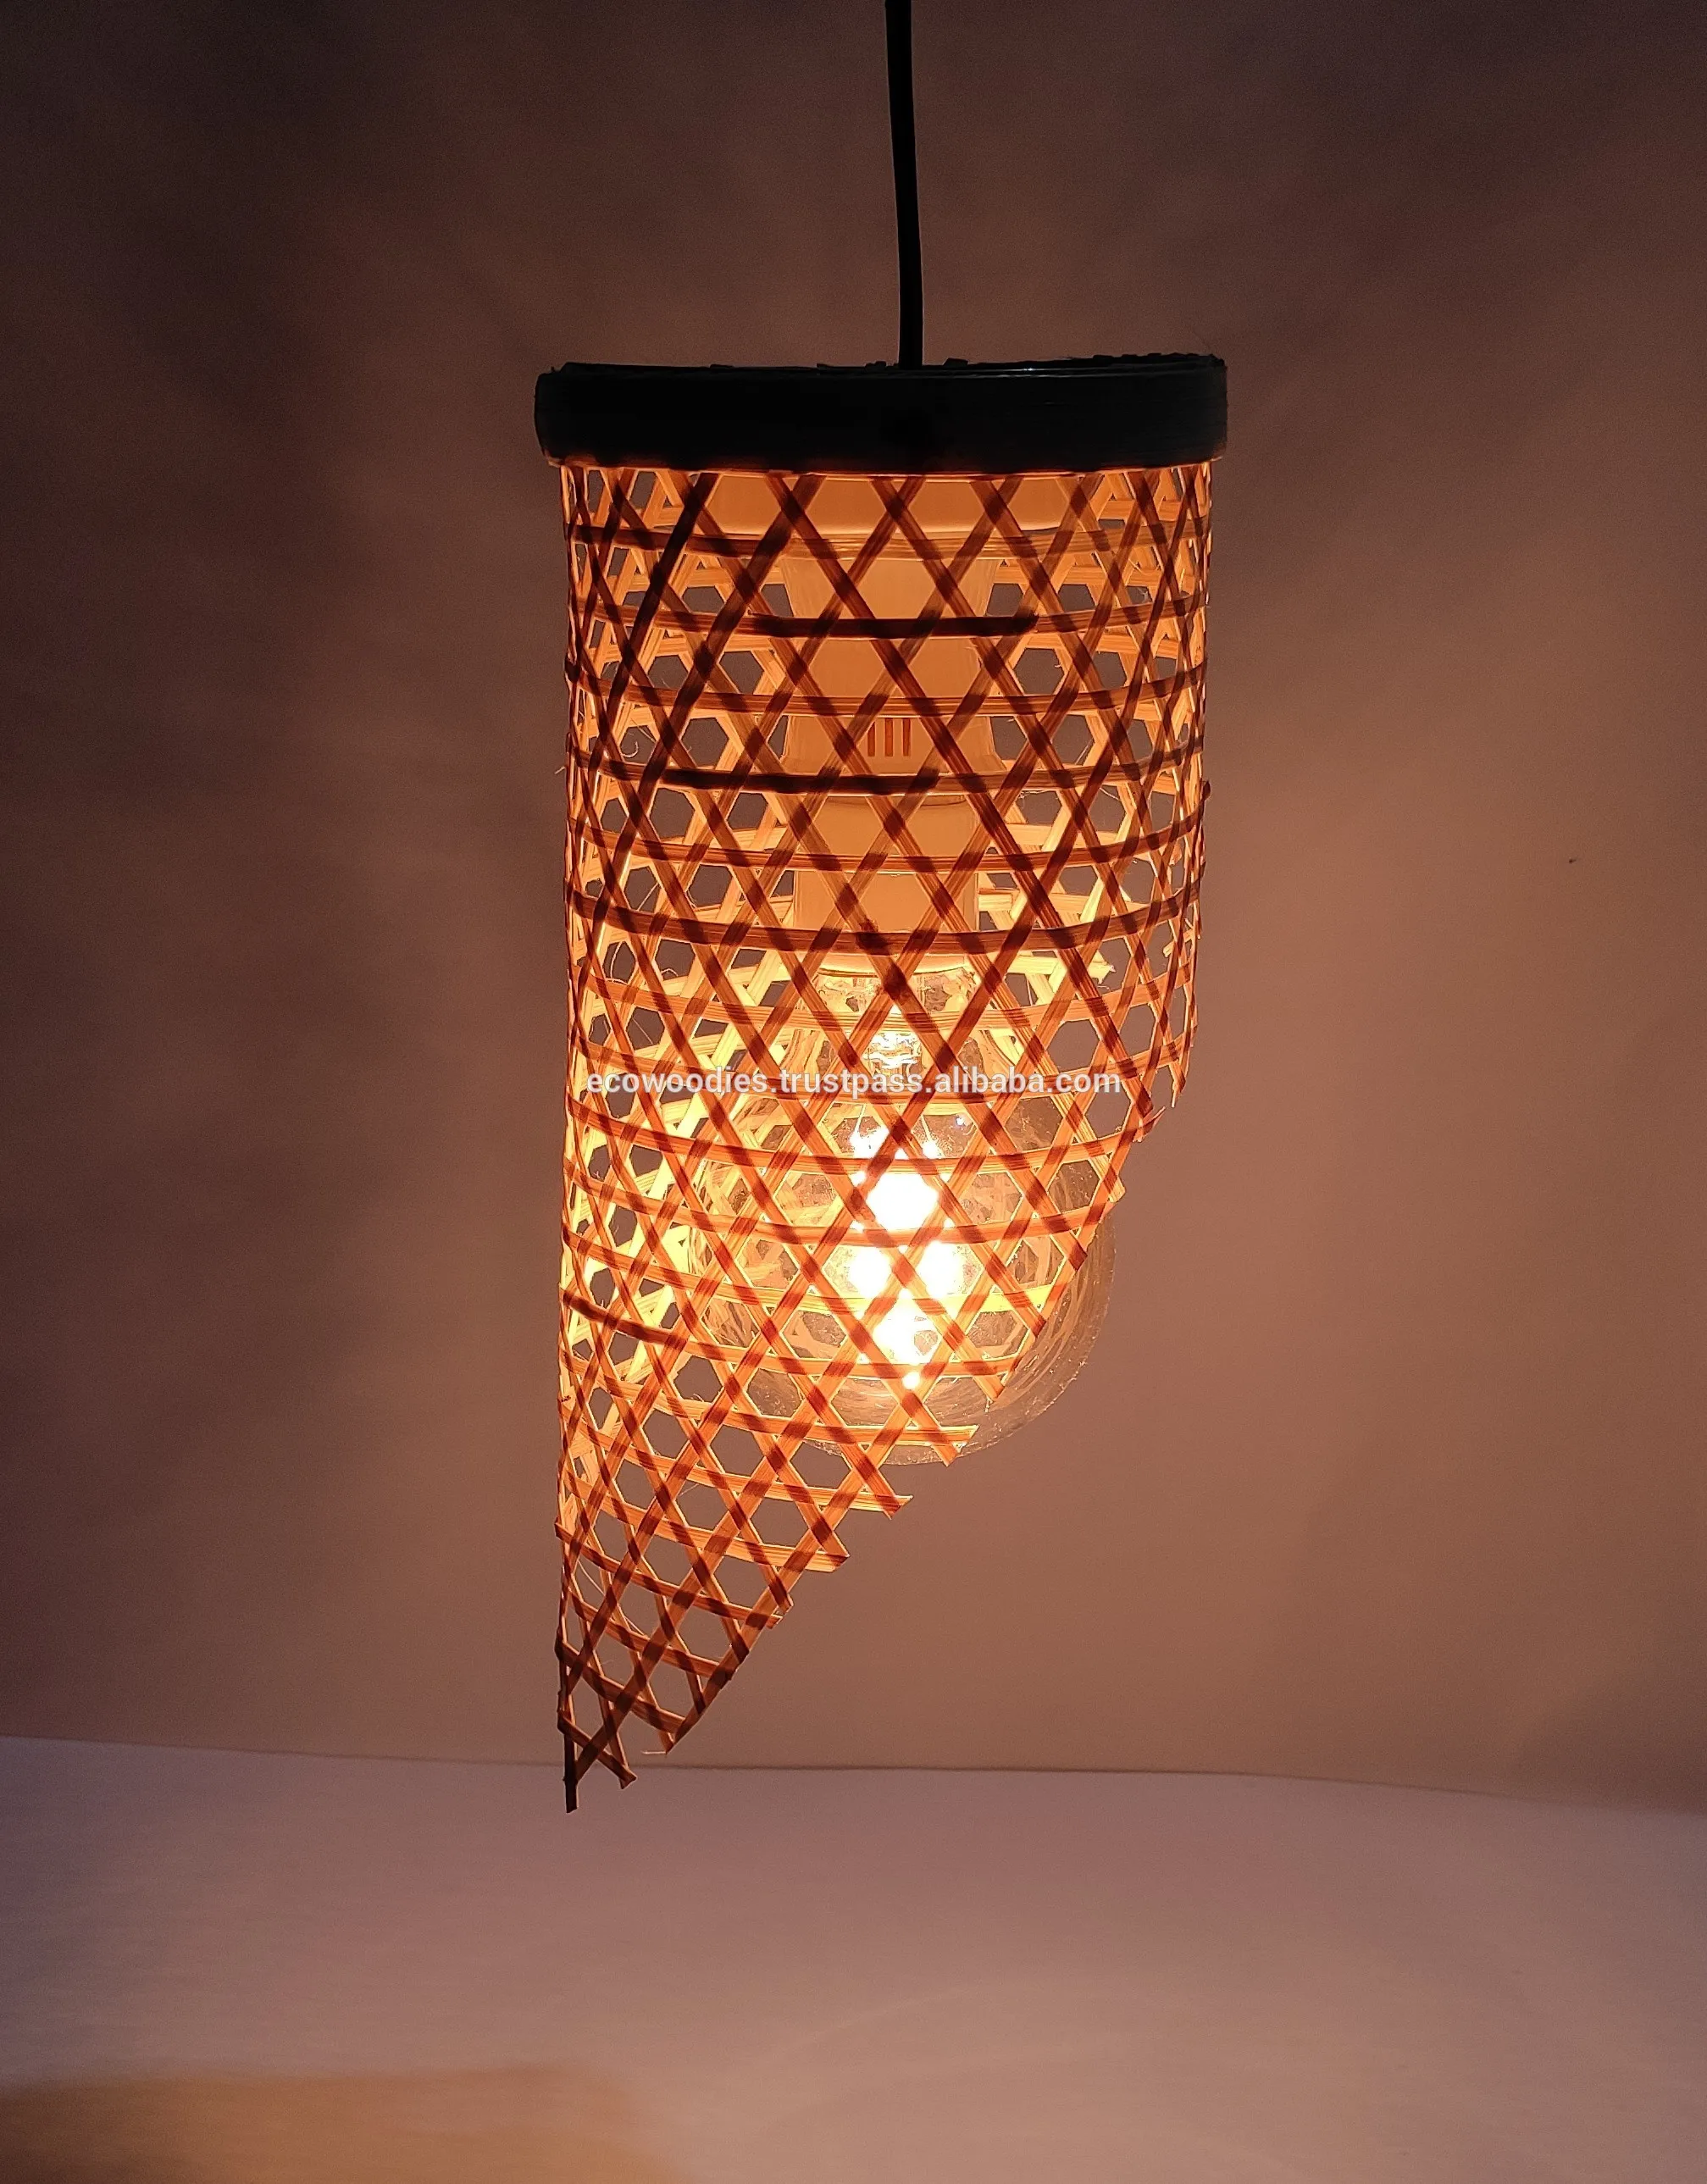 Bamboo Lamp Shade Large Decorate Lighting Vintage Pendant Cylindrical